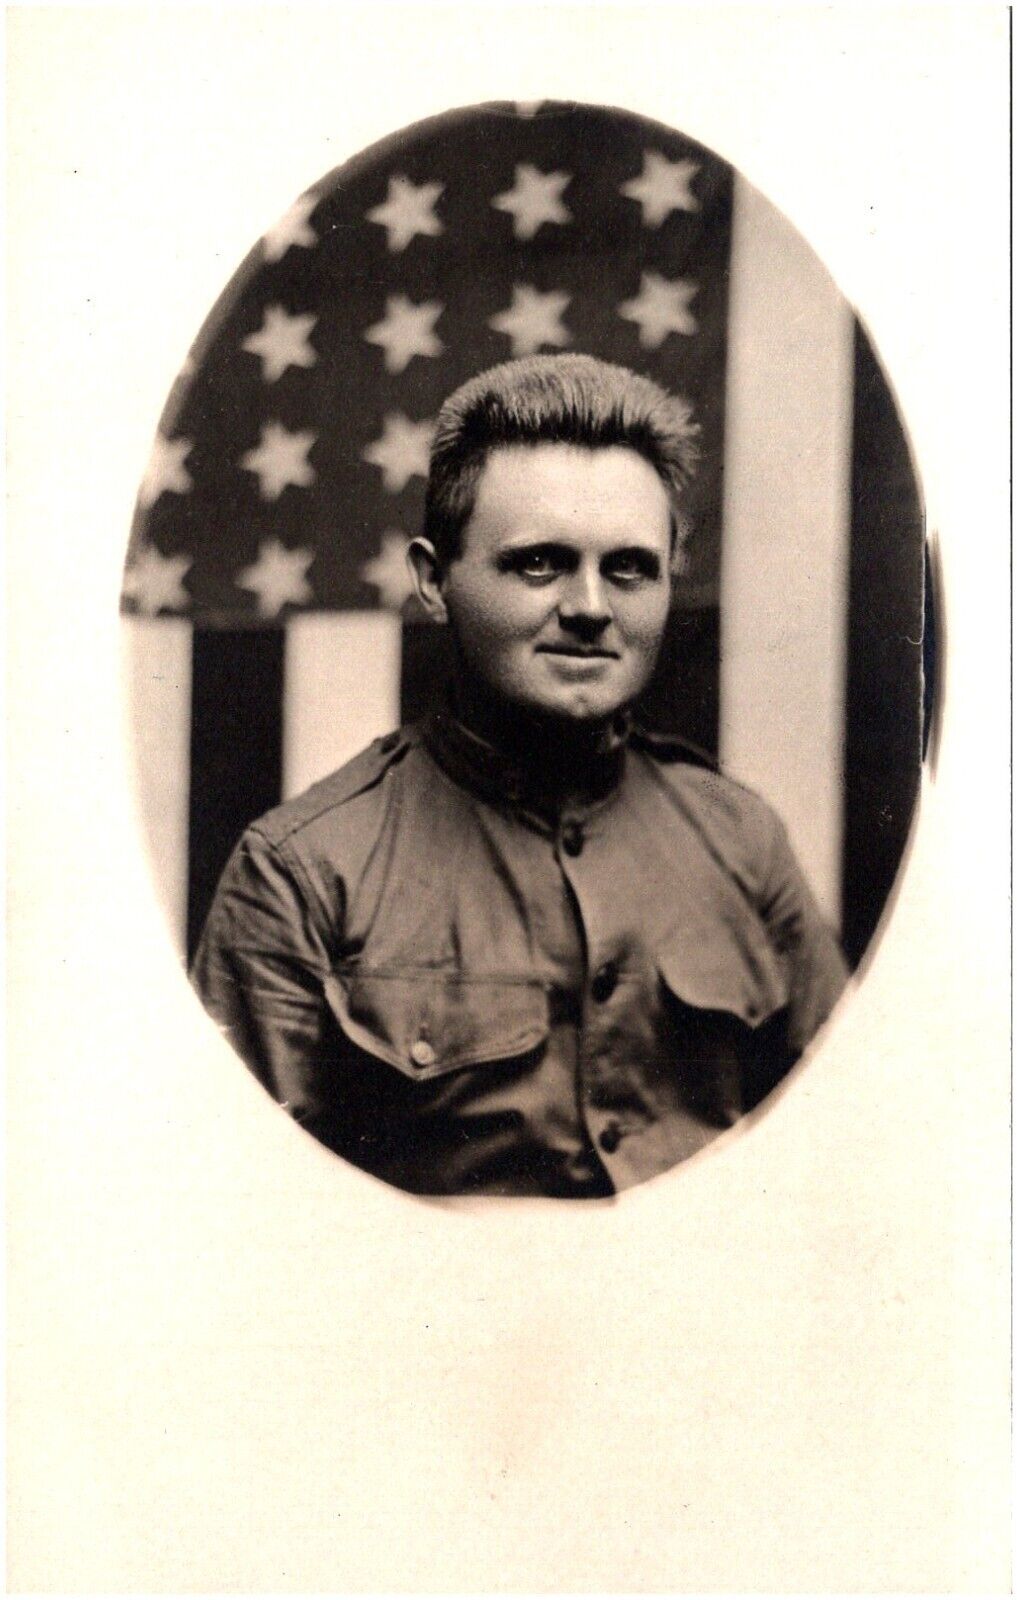 Soldier Portrait American Flag Backdrop US Army 1920s RPPC Postcard Post WW1